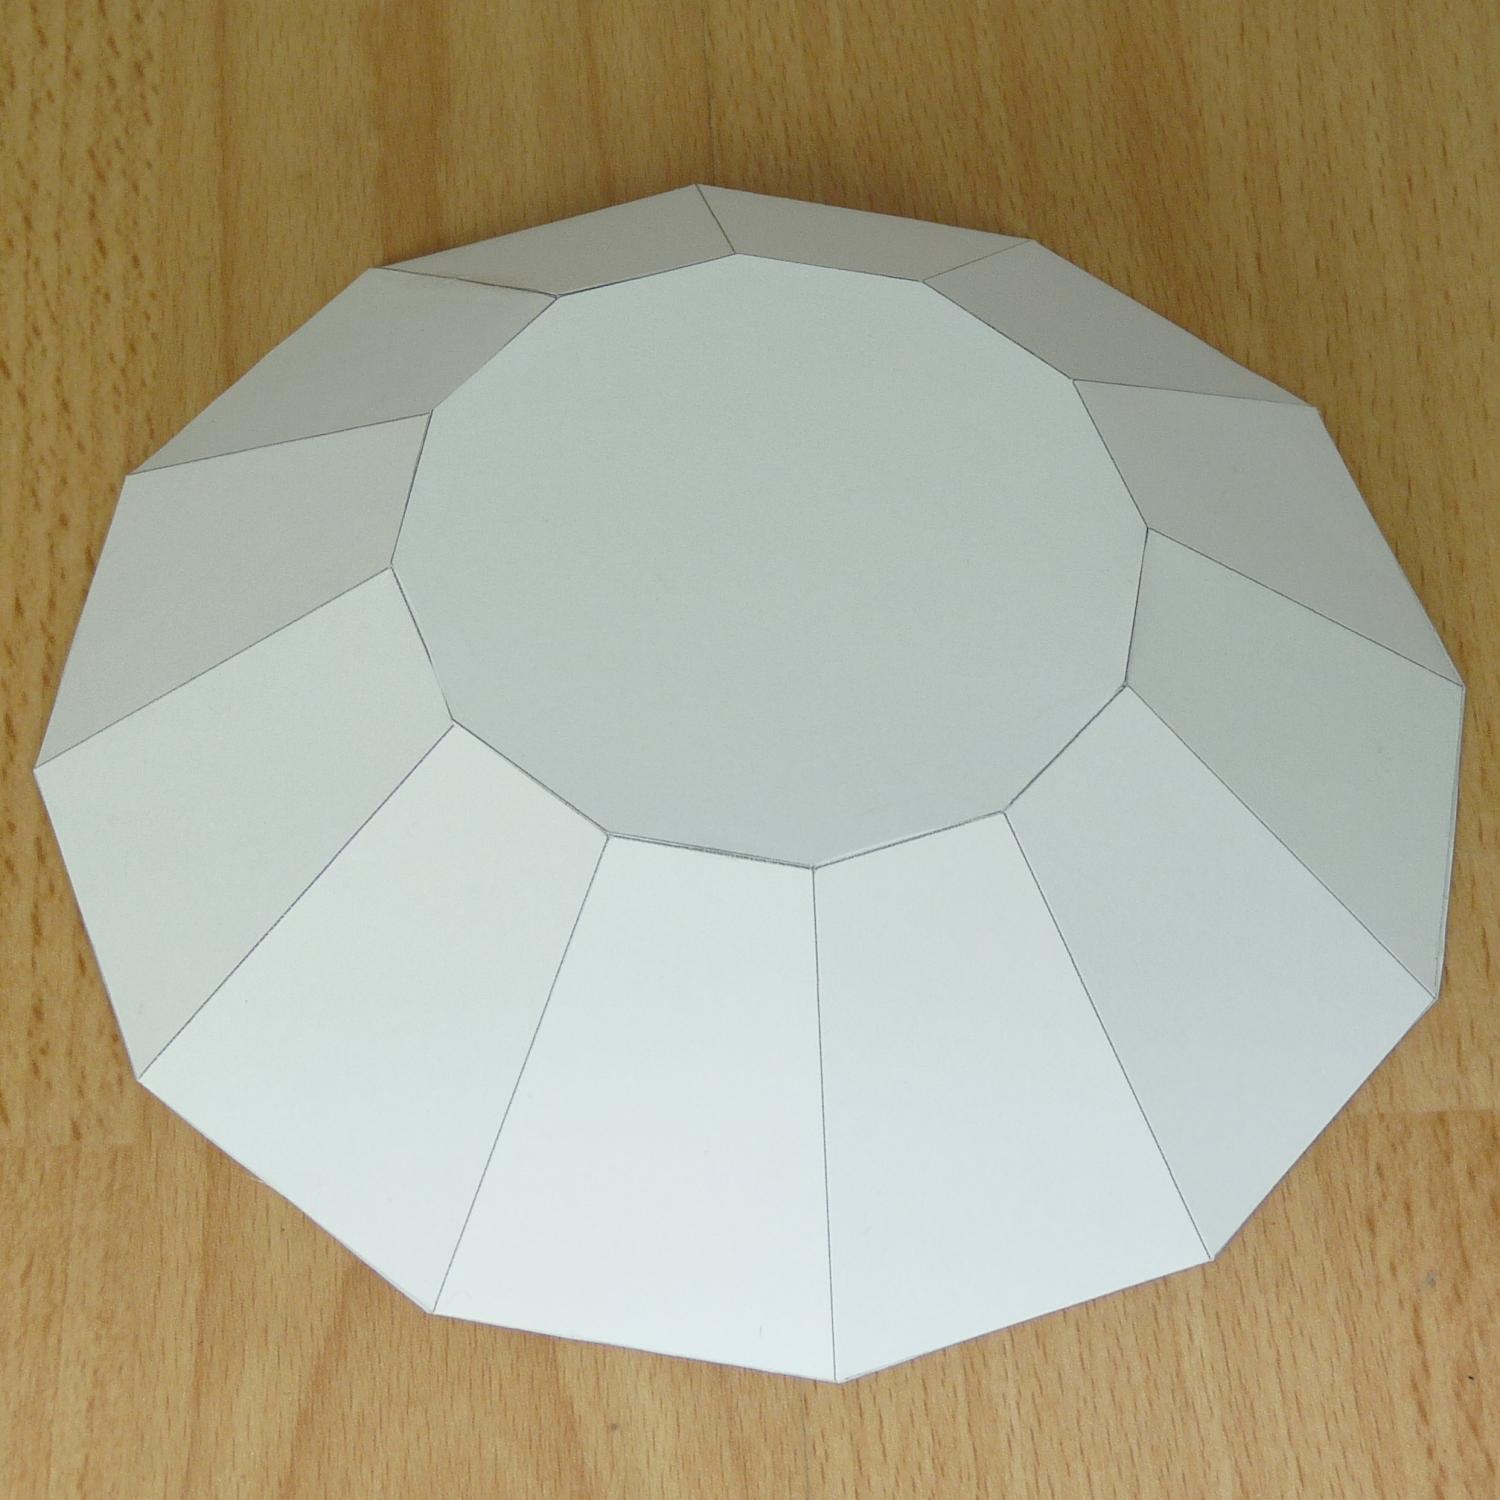 paper model truncated dodecagonal pyramid